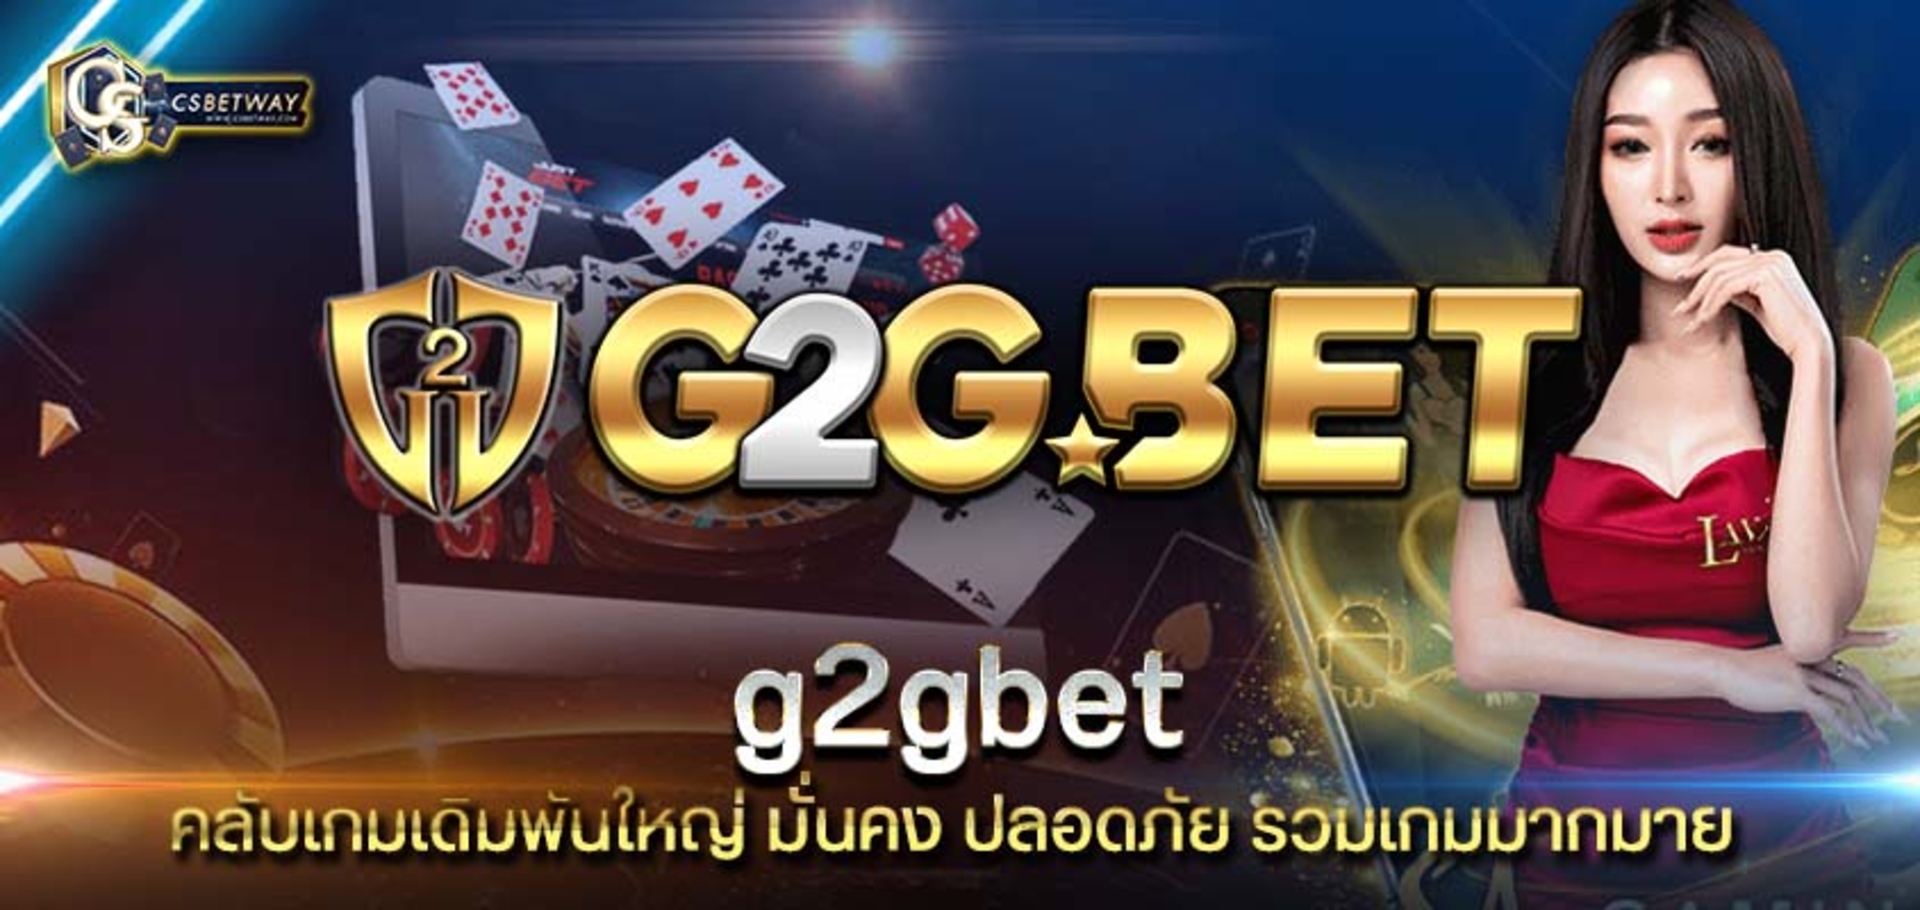 g2gbet คลับเกมเดิมพันใหญ่ มั่นคง ปลอดภัย รวมเกมมากมาย สมัครง่ายผ่านเว็บ